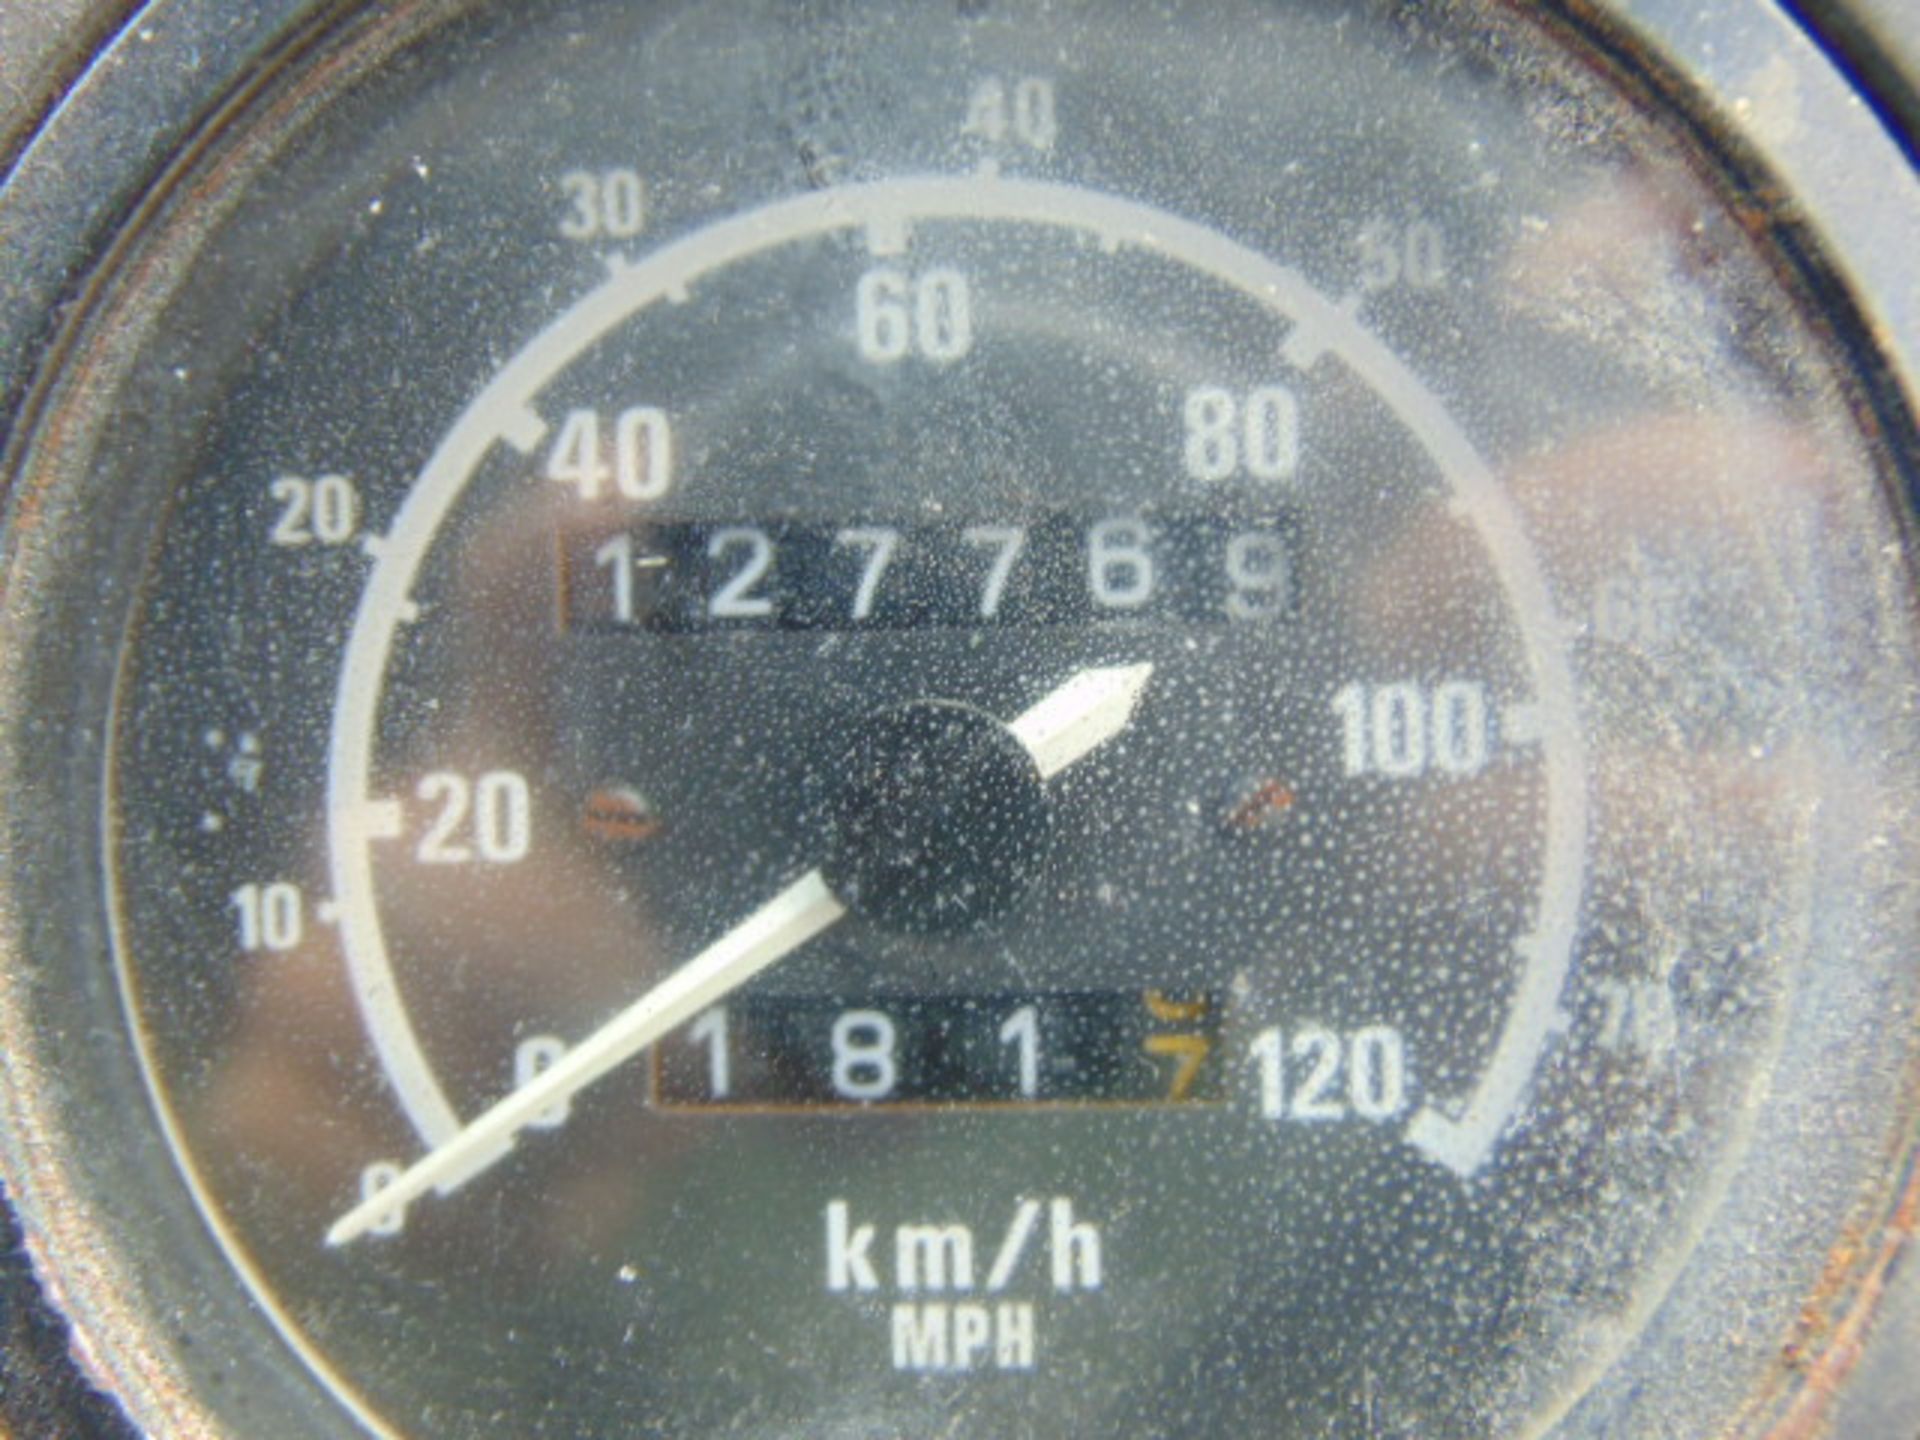 Leyland Daf 45/150 4 x 4 - Image 14 of 14